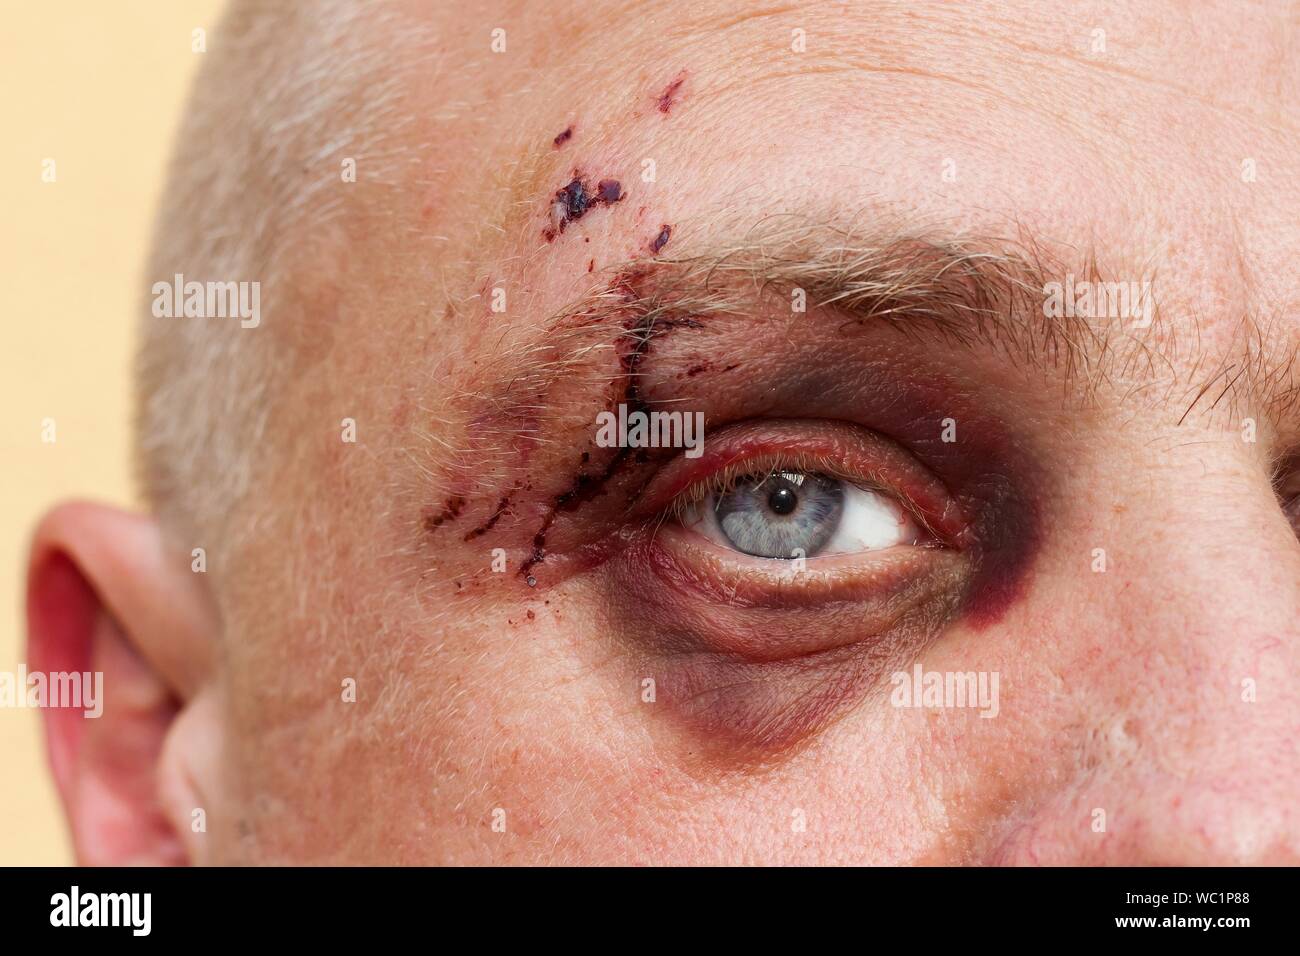 Male eye with a large purple bruise. Biting dog on face. Eye injury. Large bruising on the male eye. Treatment of injuries. Boxer eye. Stock Photo